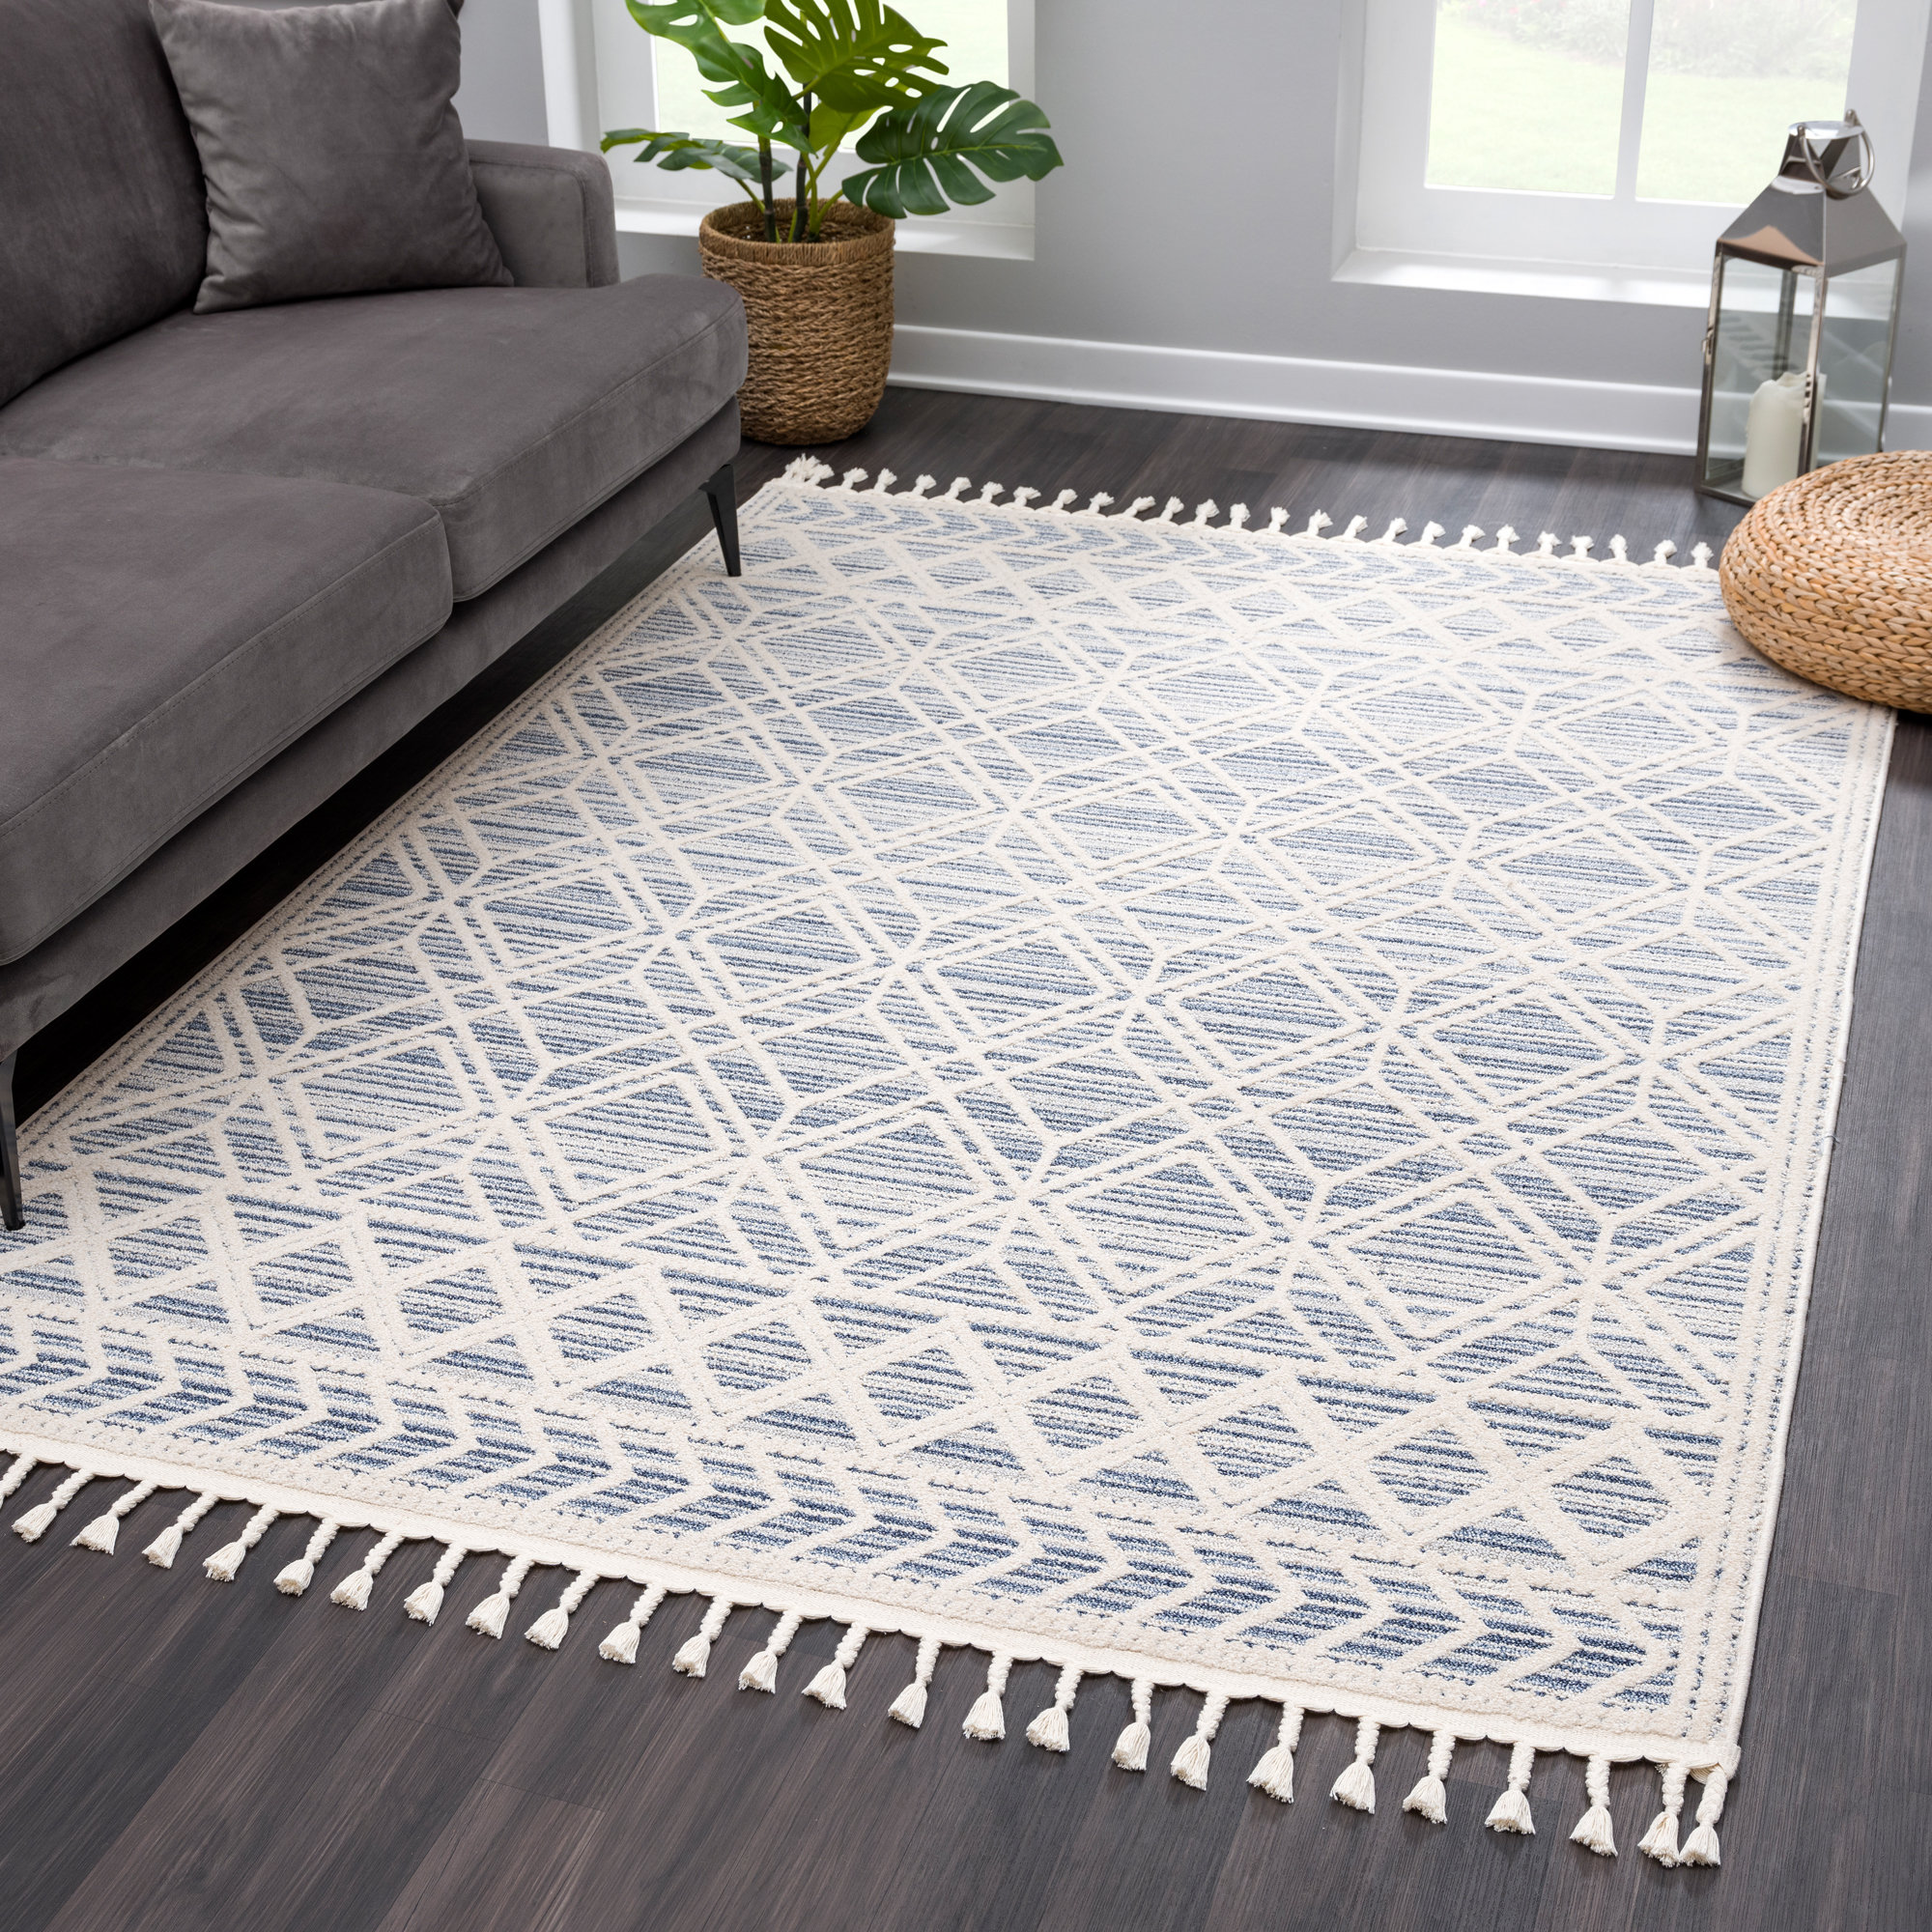 Large Short Pile Rug in Grey Beige Tones Morroccan Ornamental Design Carpet 